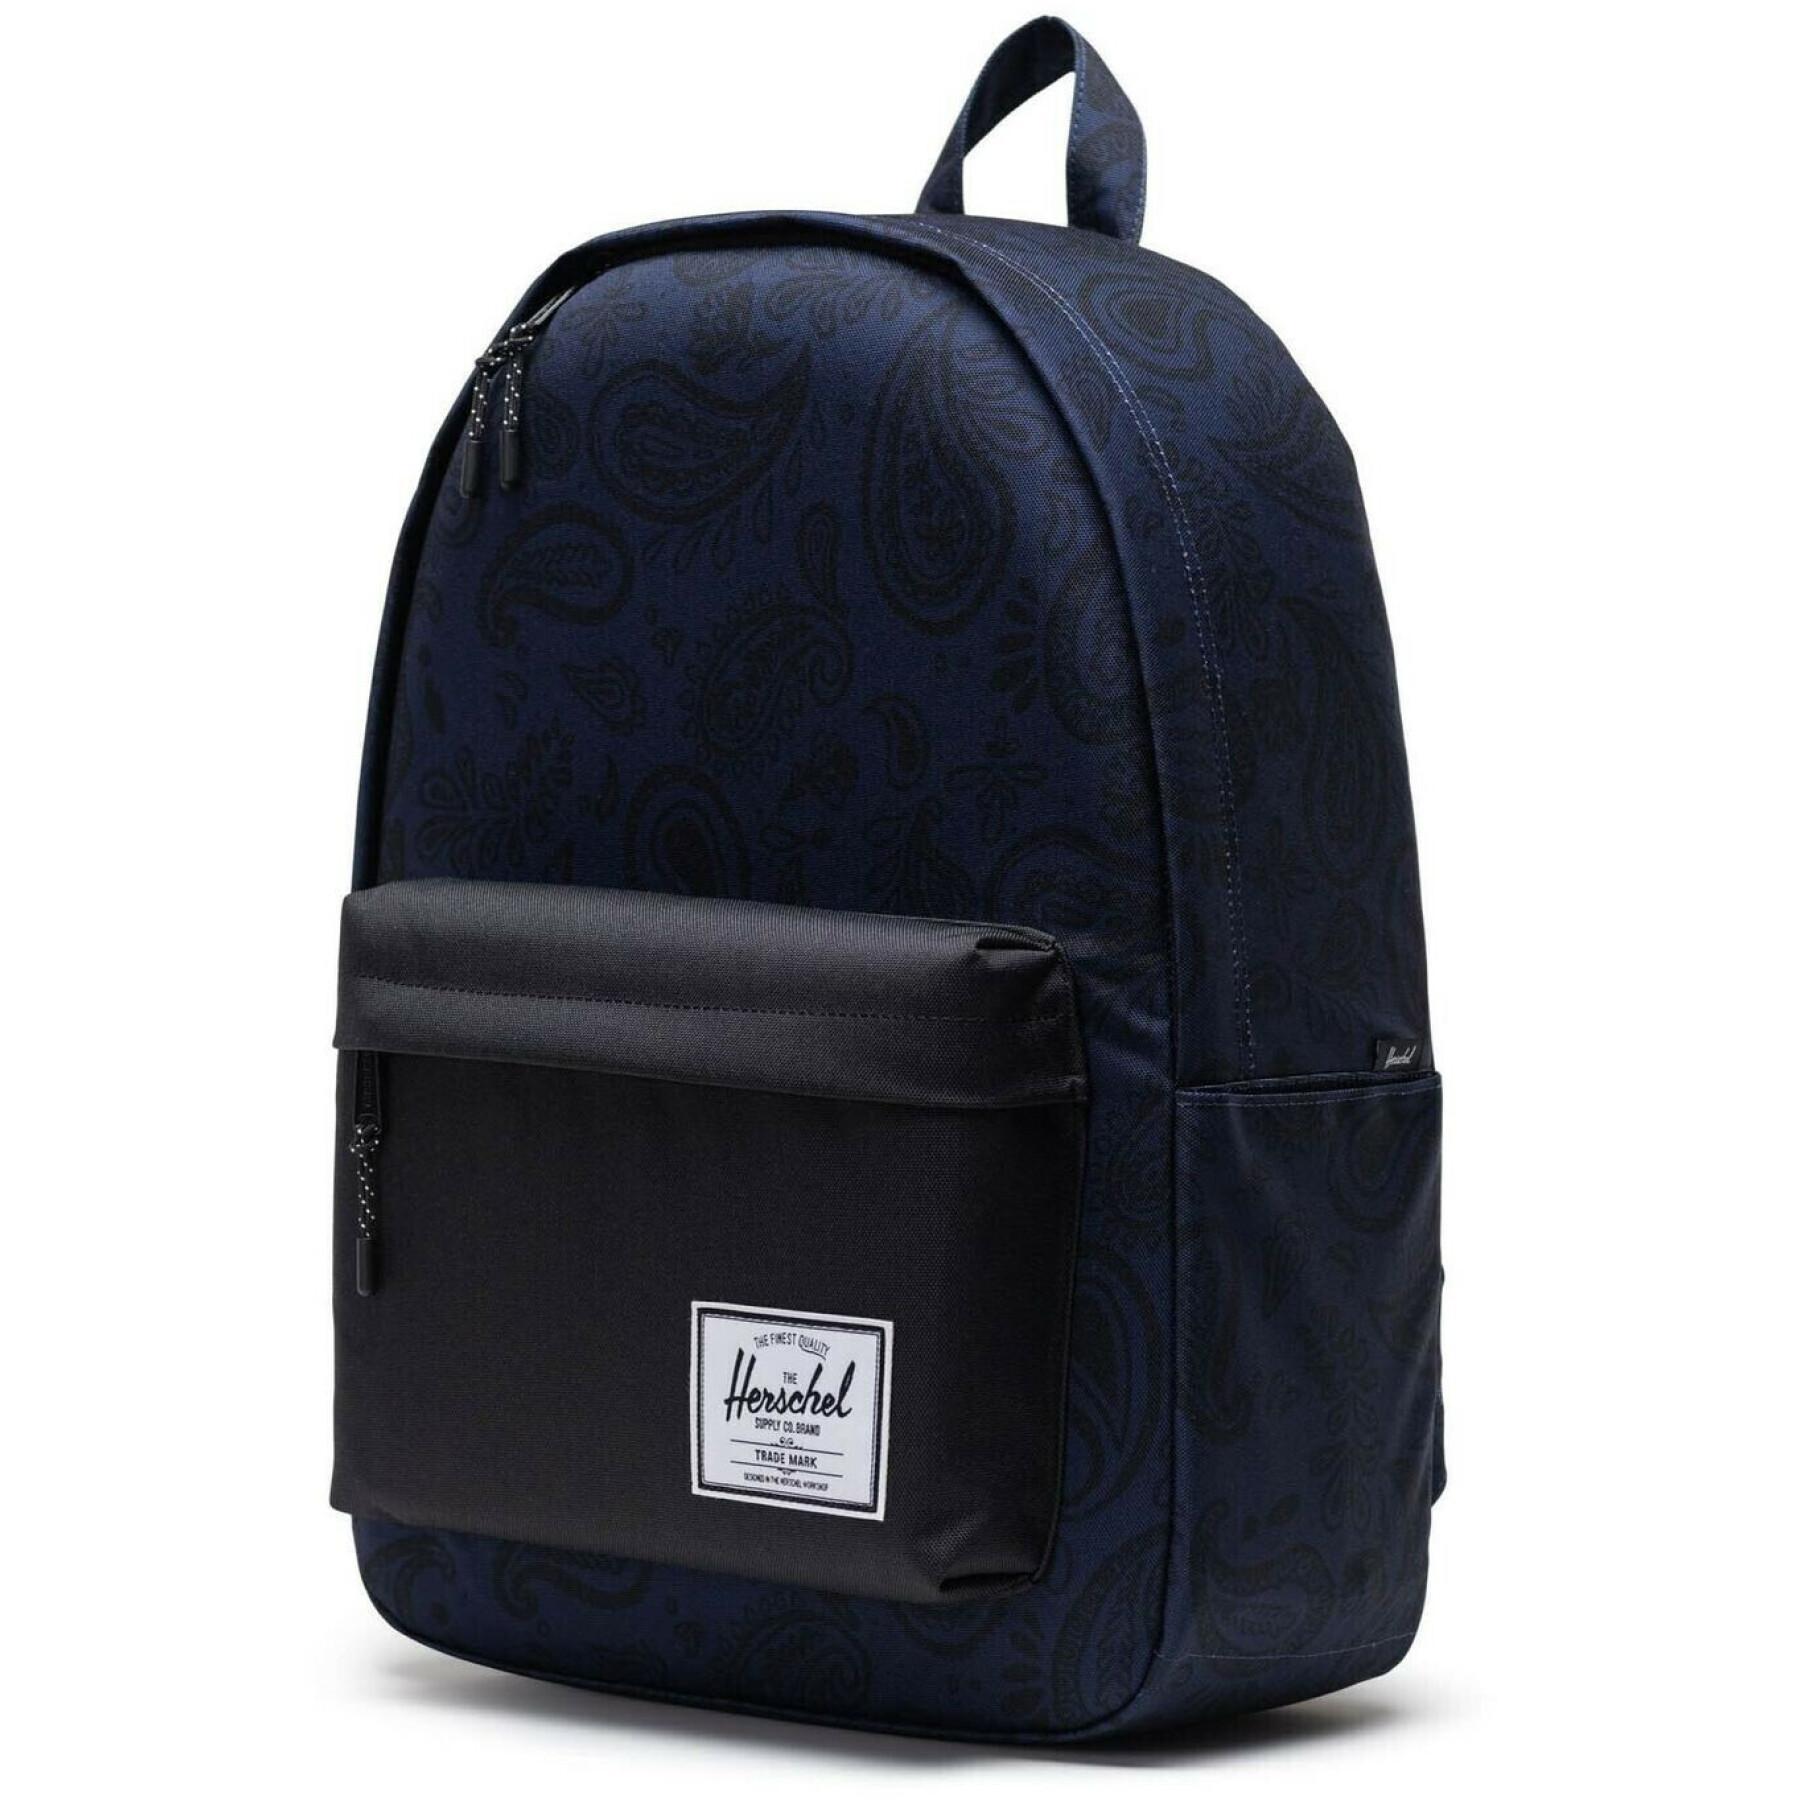 Backpack Herschel classic xl